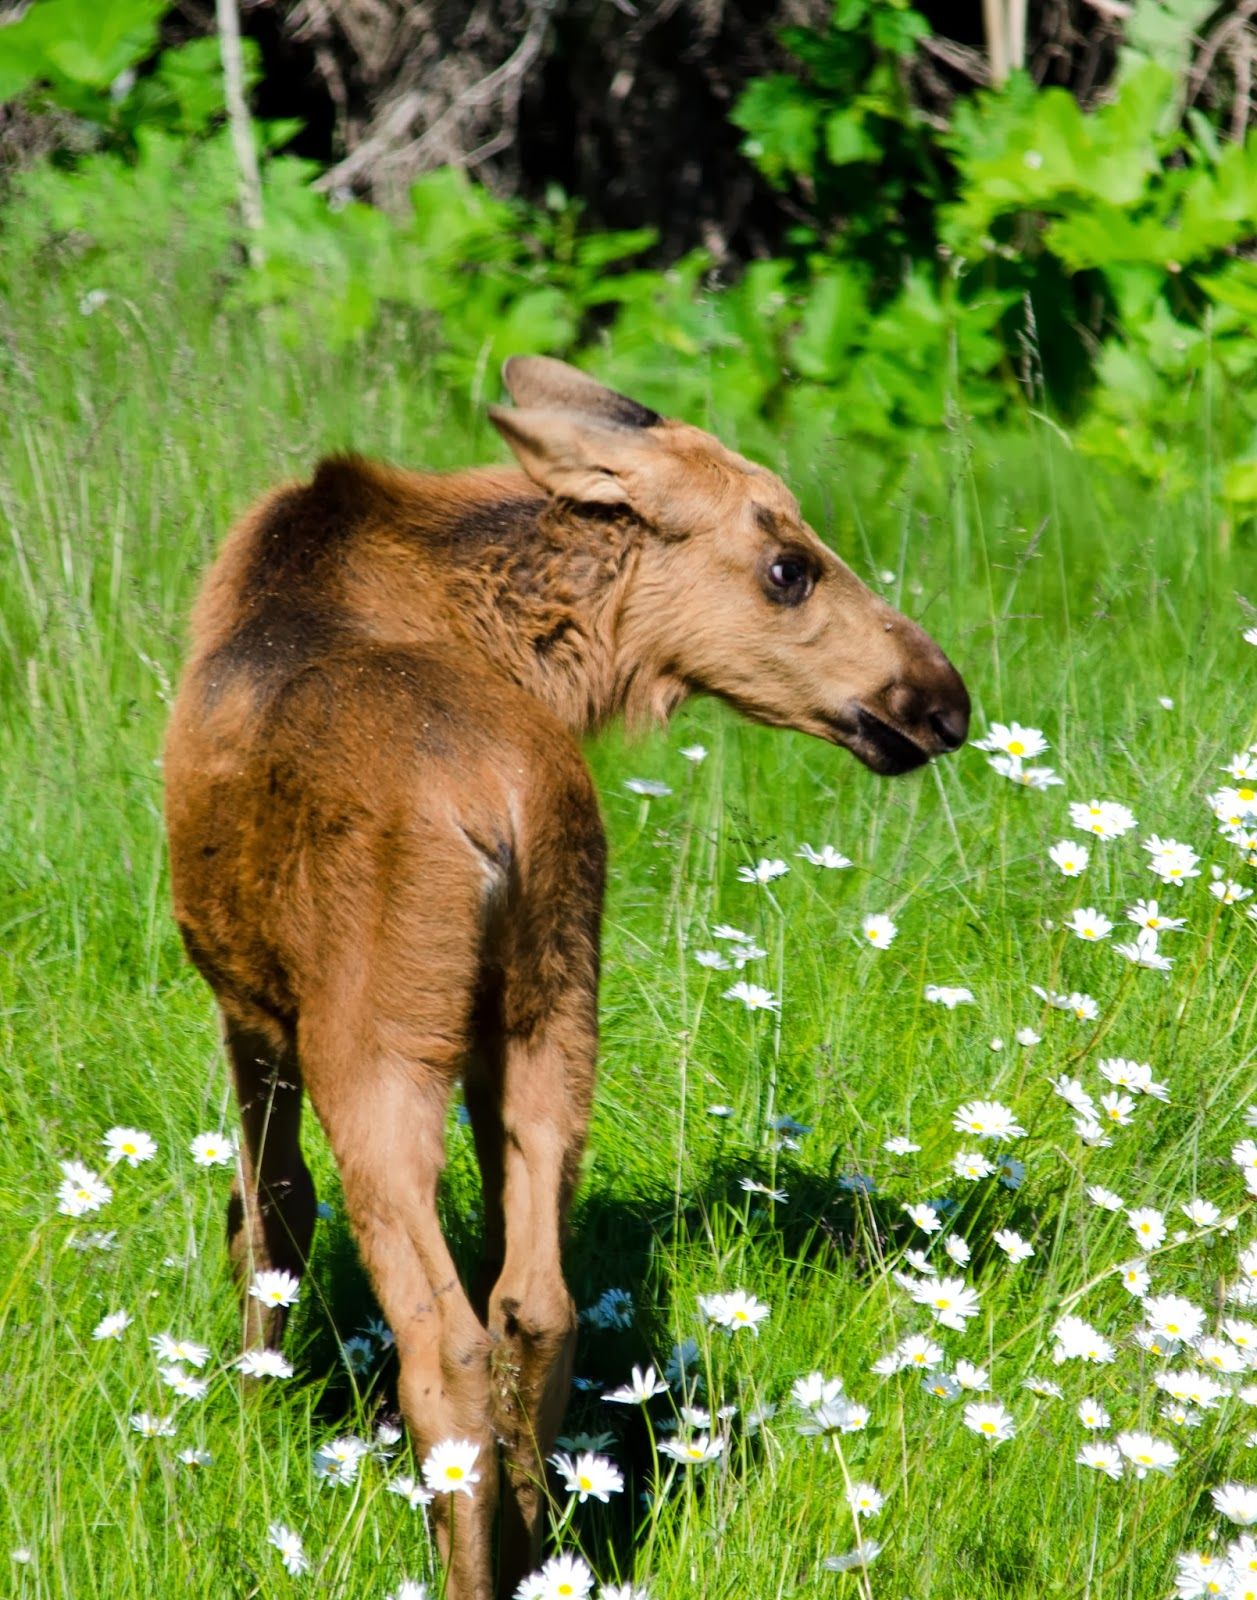 Experience - Viewing Baby Moose | baby-moose | Pinterest | Moose